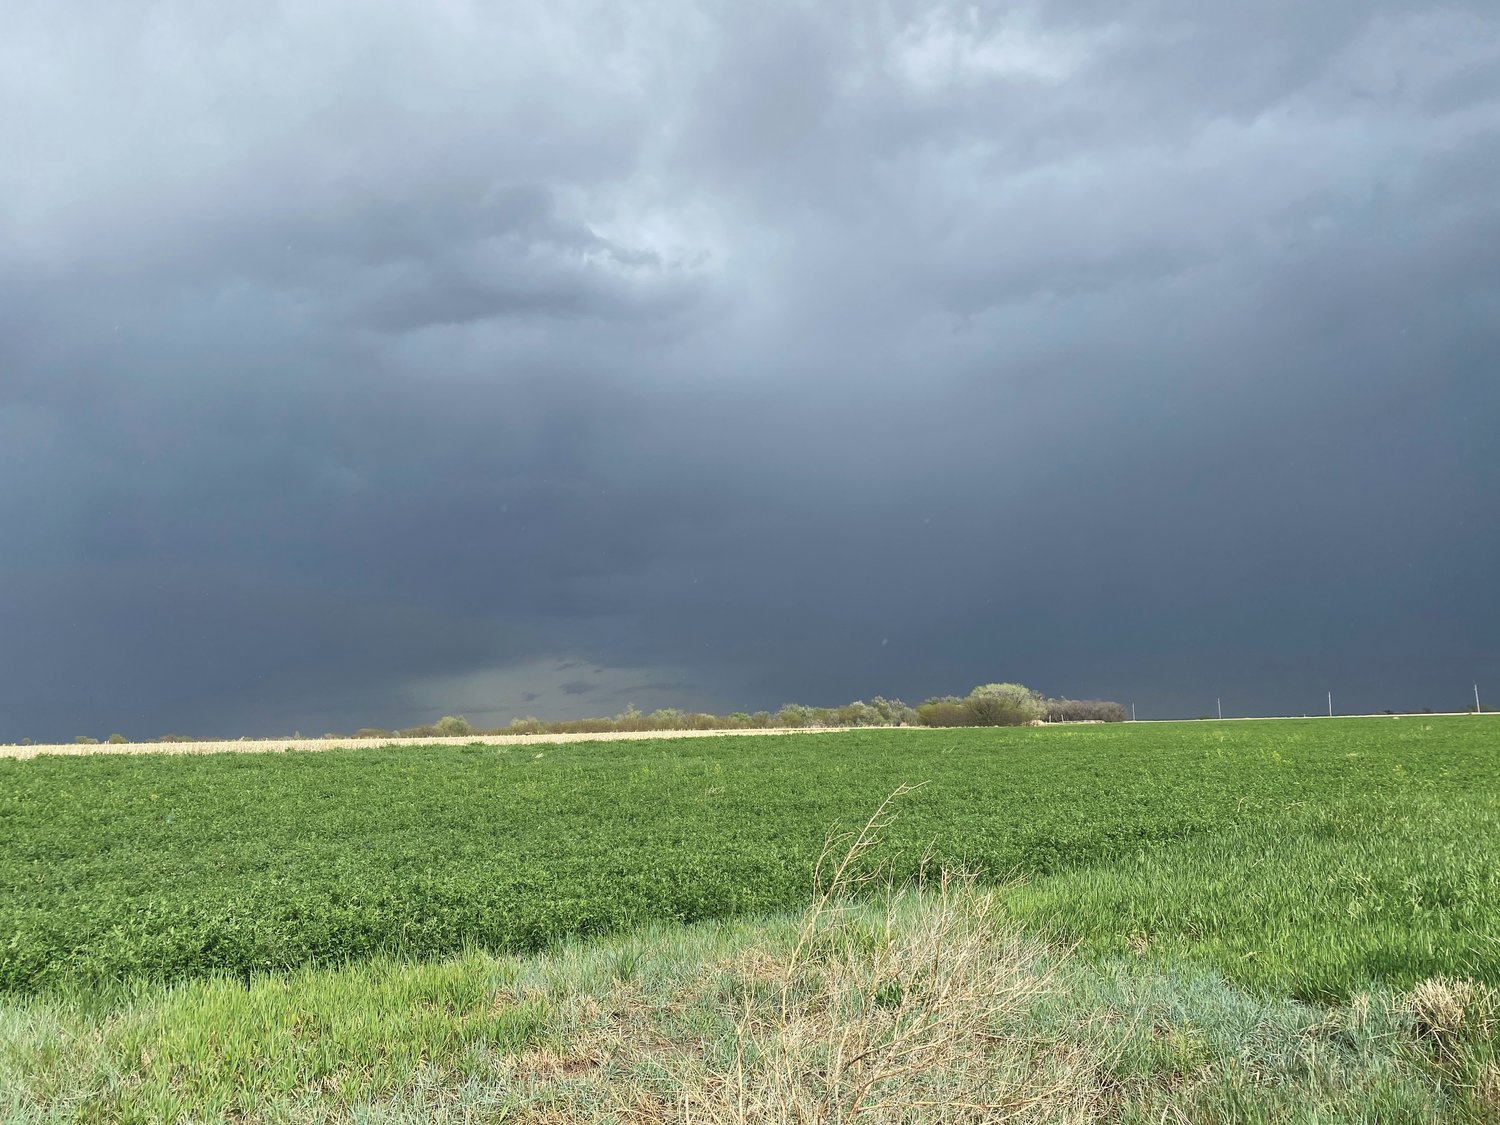 An approaching storm in western Kansas.